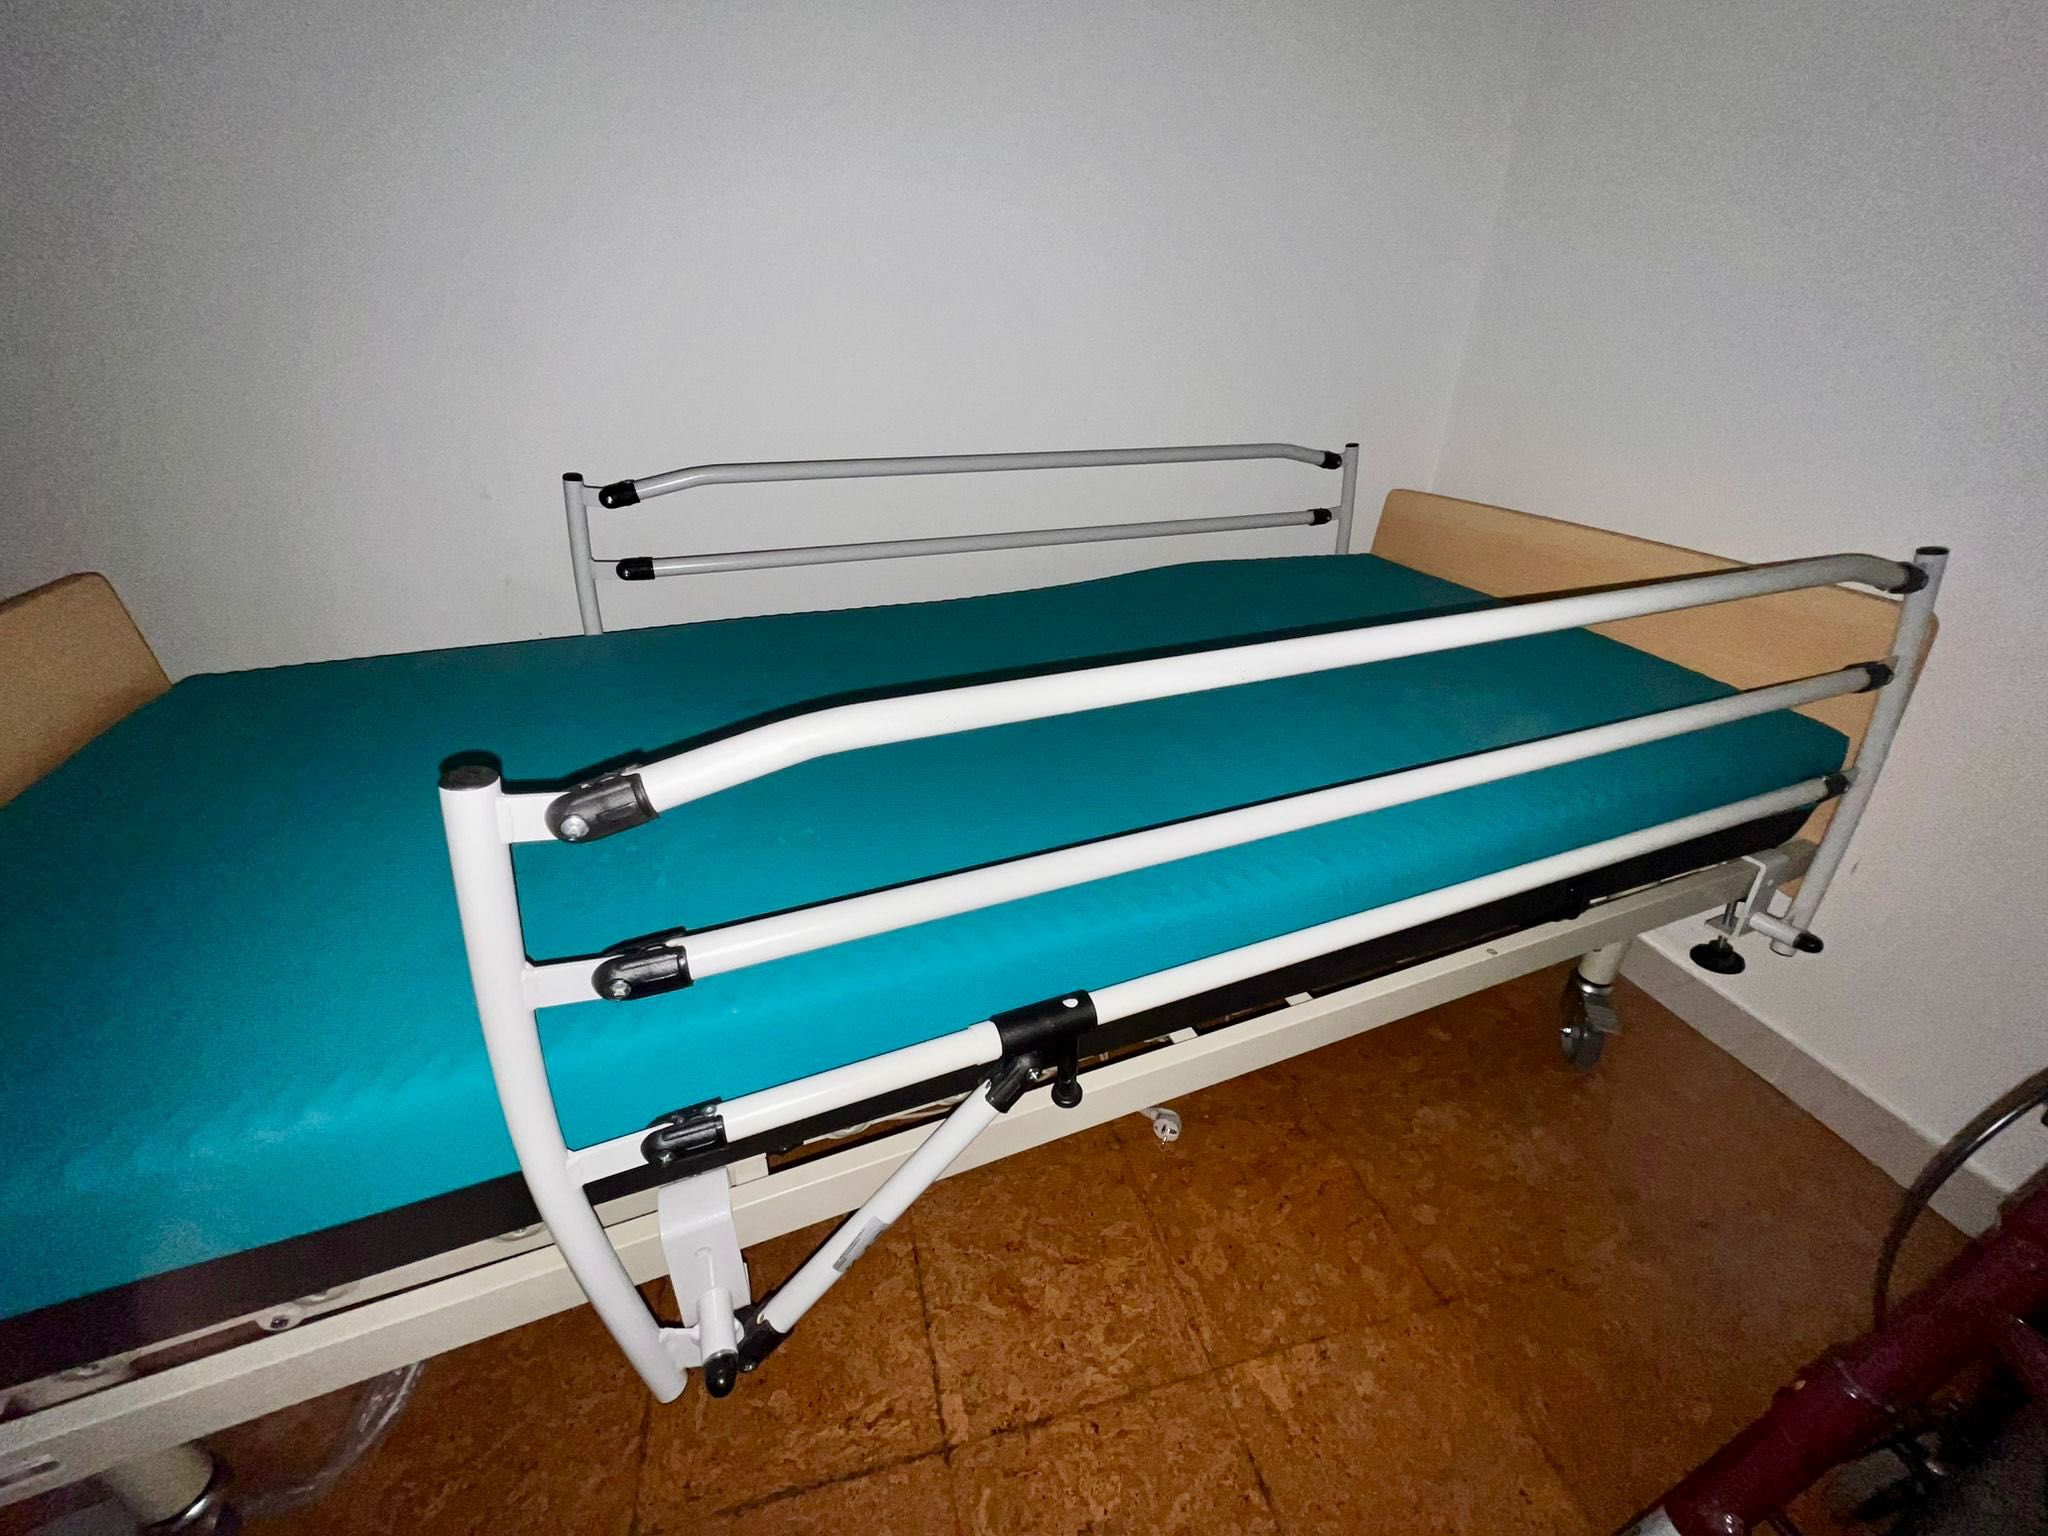 Cama articulada elétrica, andarilho, mesa de apoio hospitalar